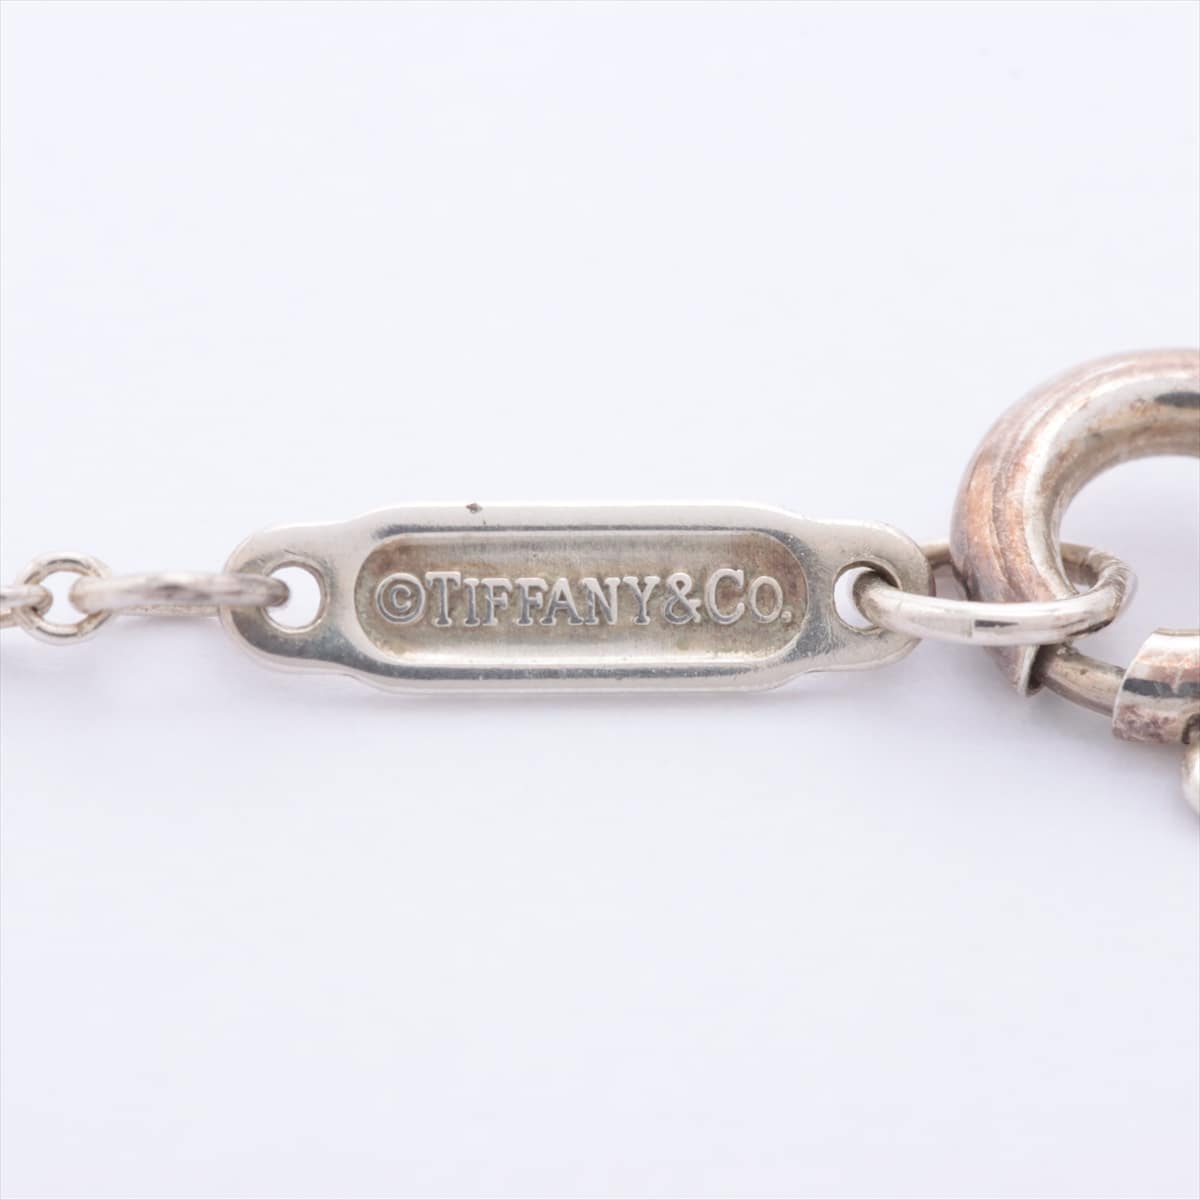 Tiffany 1837 Interlocking Circle Necklace Rubedo Metal × SV925 Silver